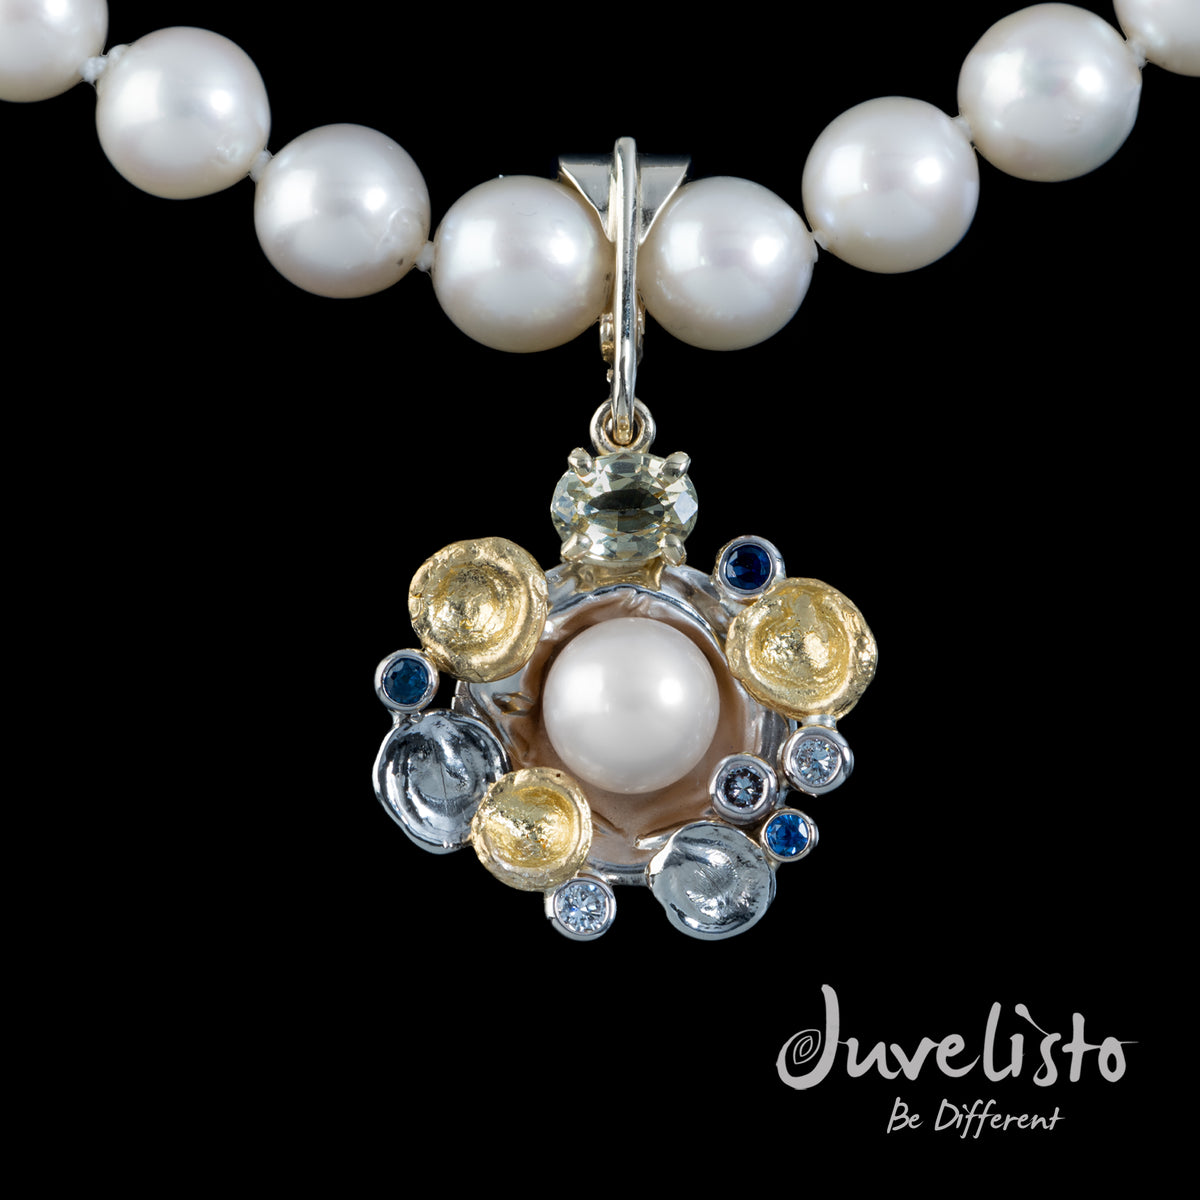 Juvelisto Design 18k White &amp; 24k Yellow Gold Pendant with Pearl, Sapphires &amp; Diamonds